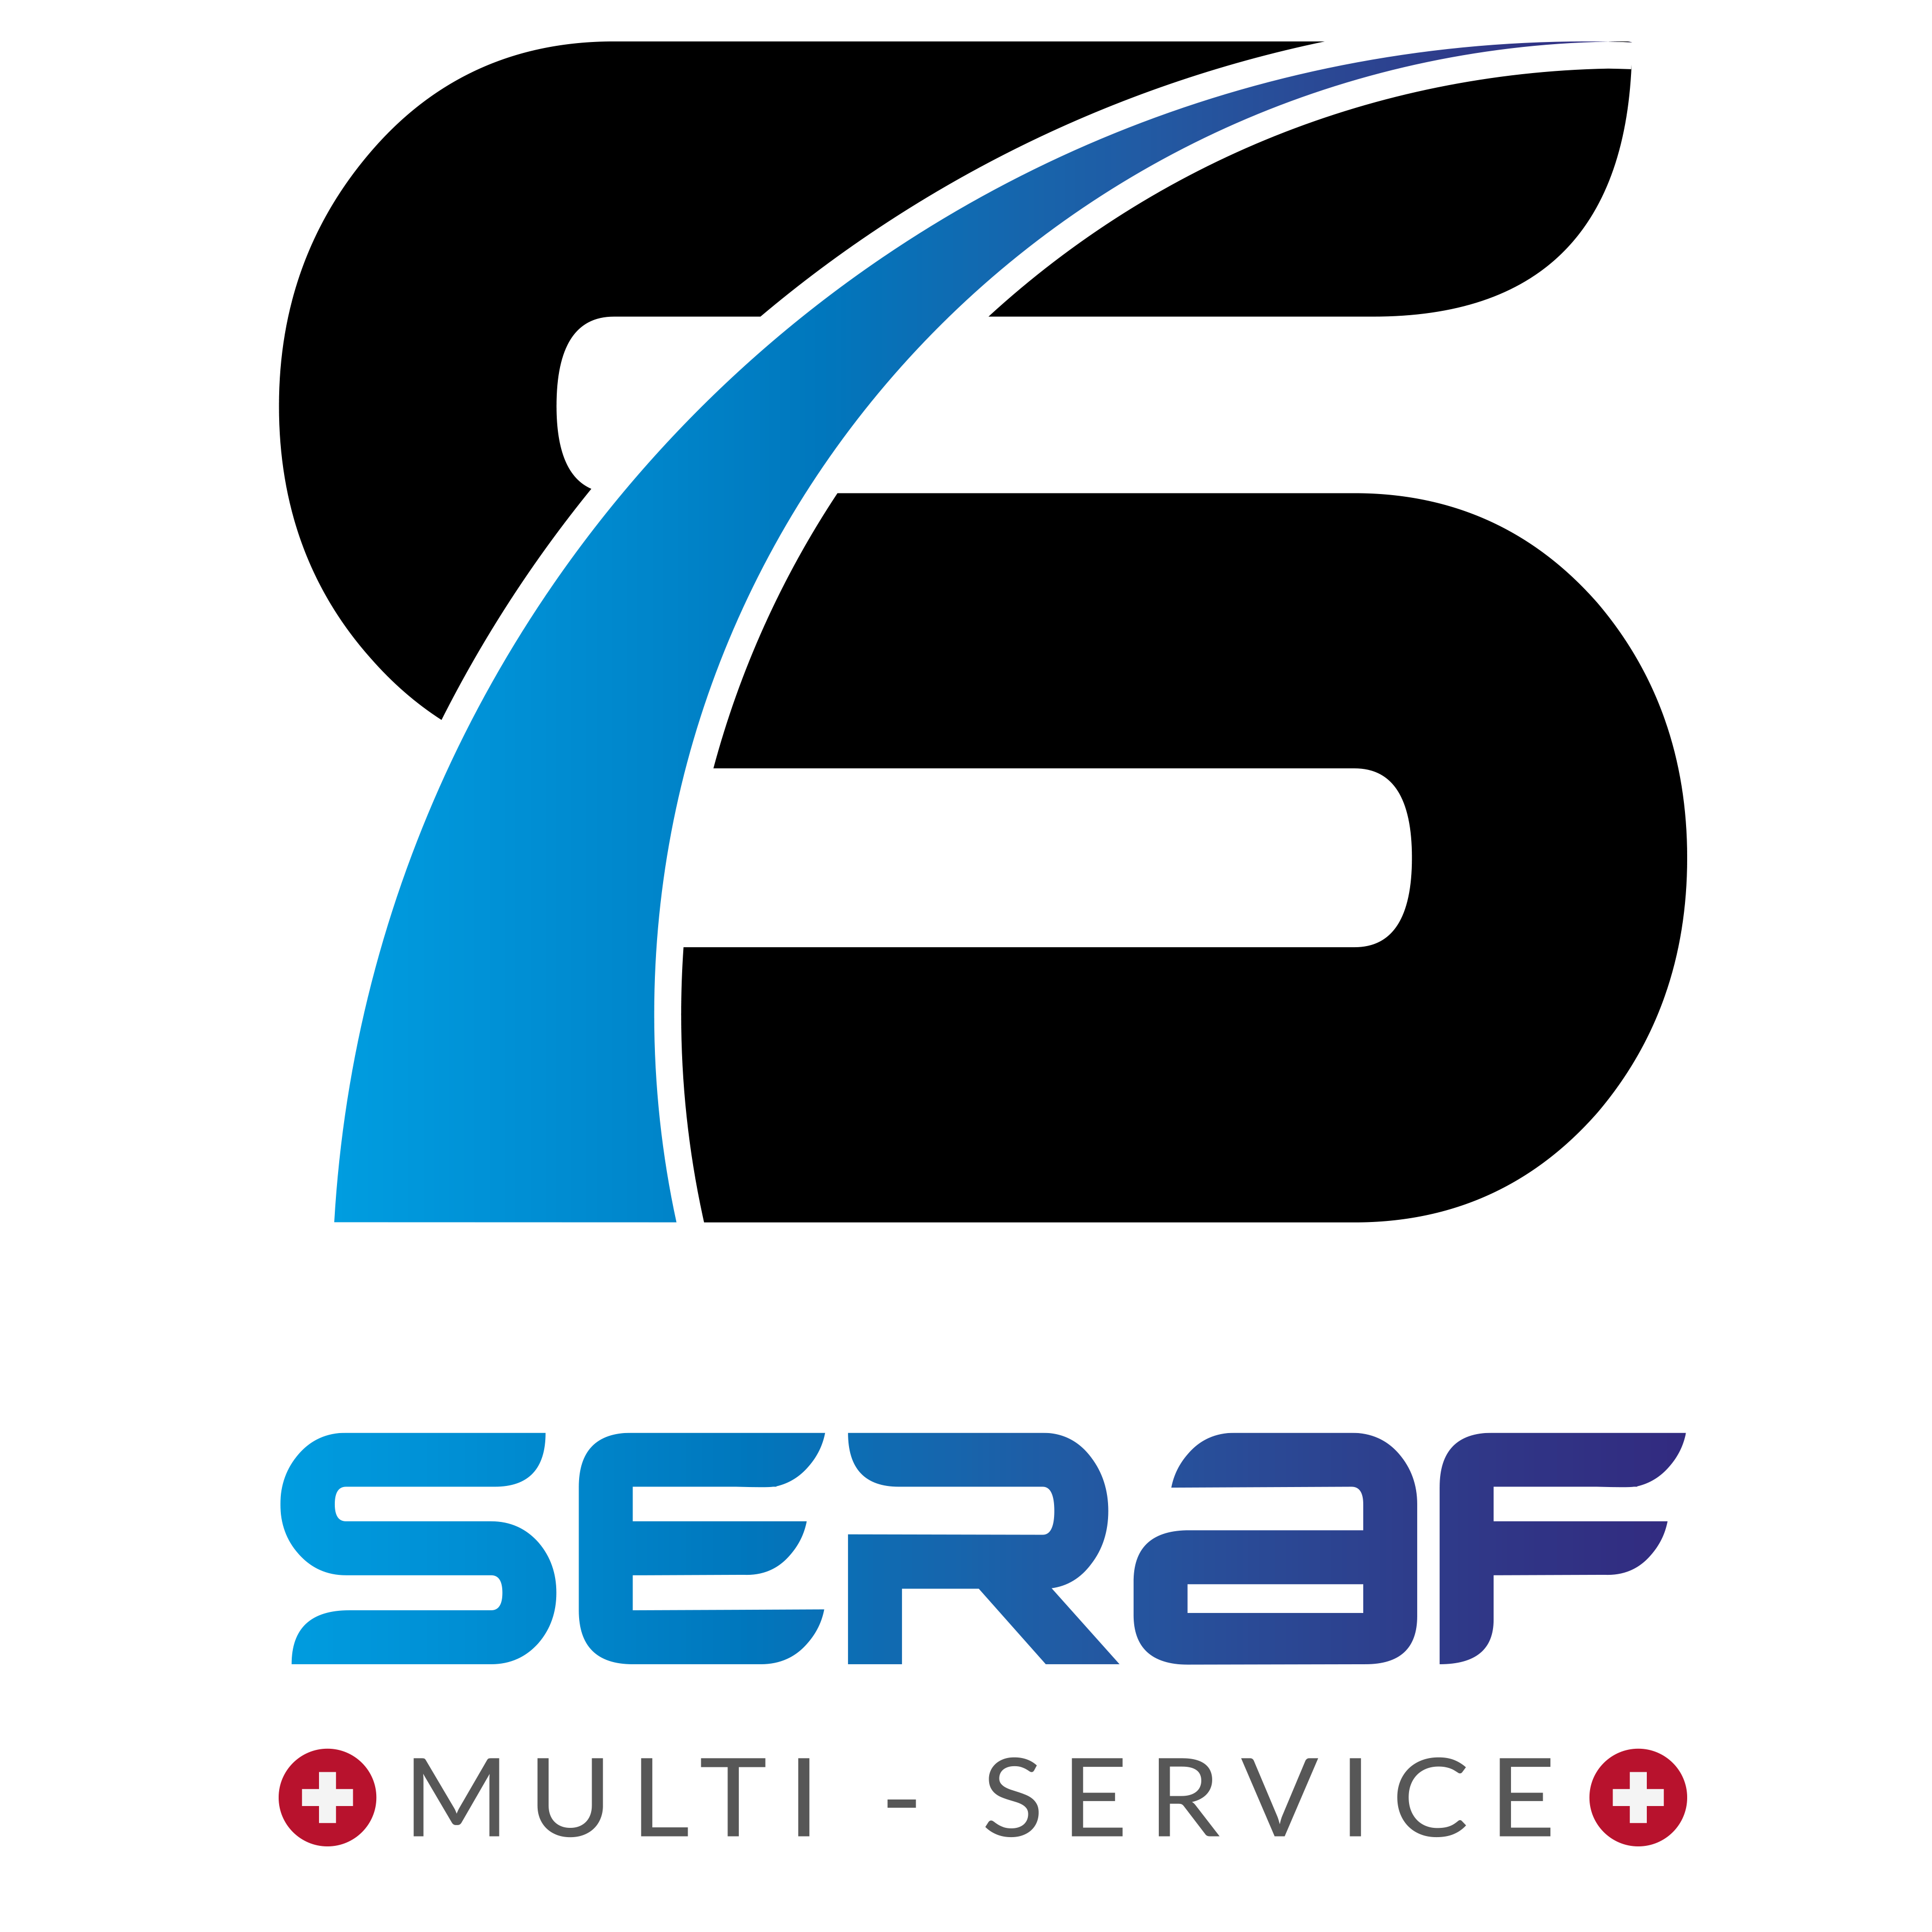 Seraf Multiservice Logo